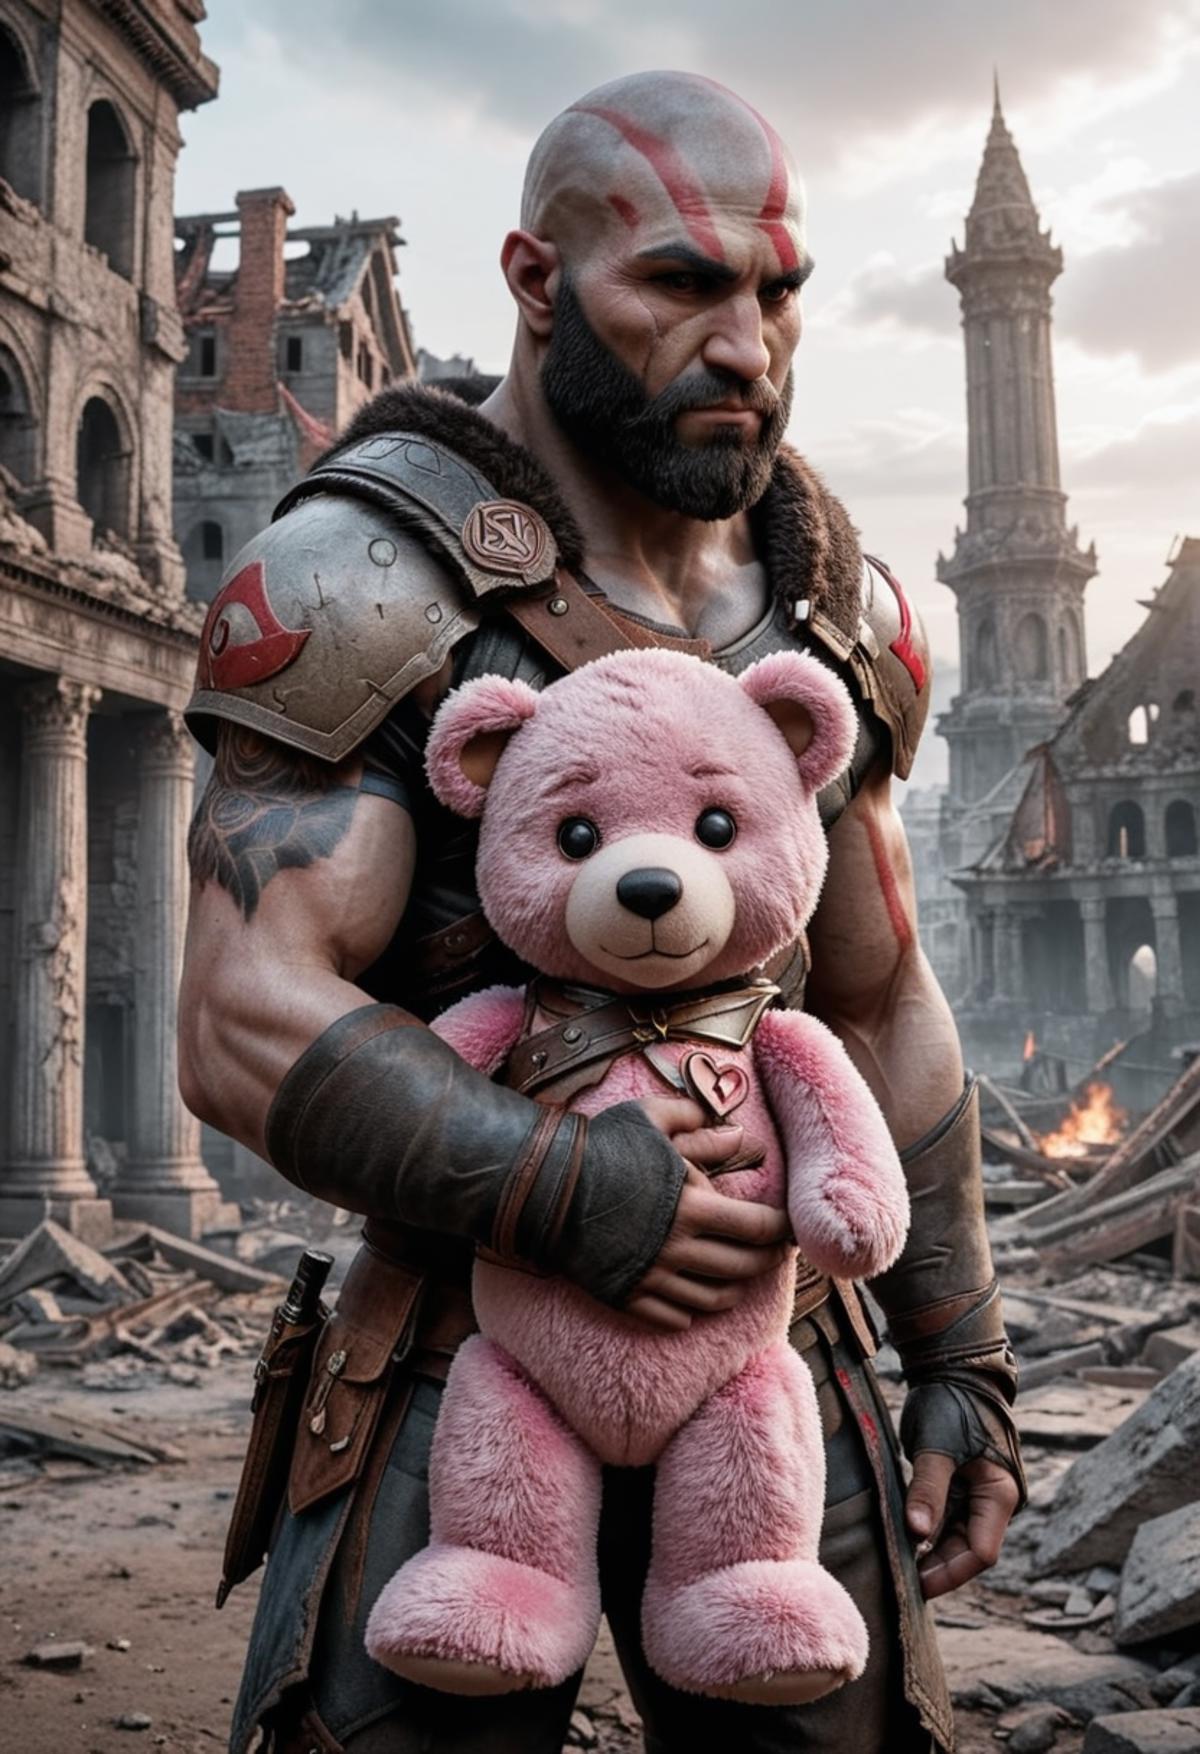 A man holding a pink teddy bear in a war-torn environment.